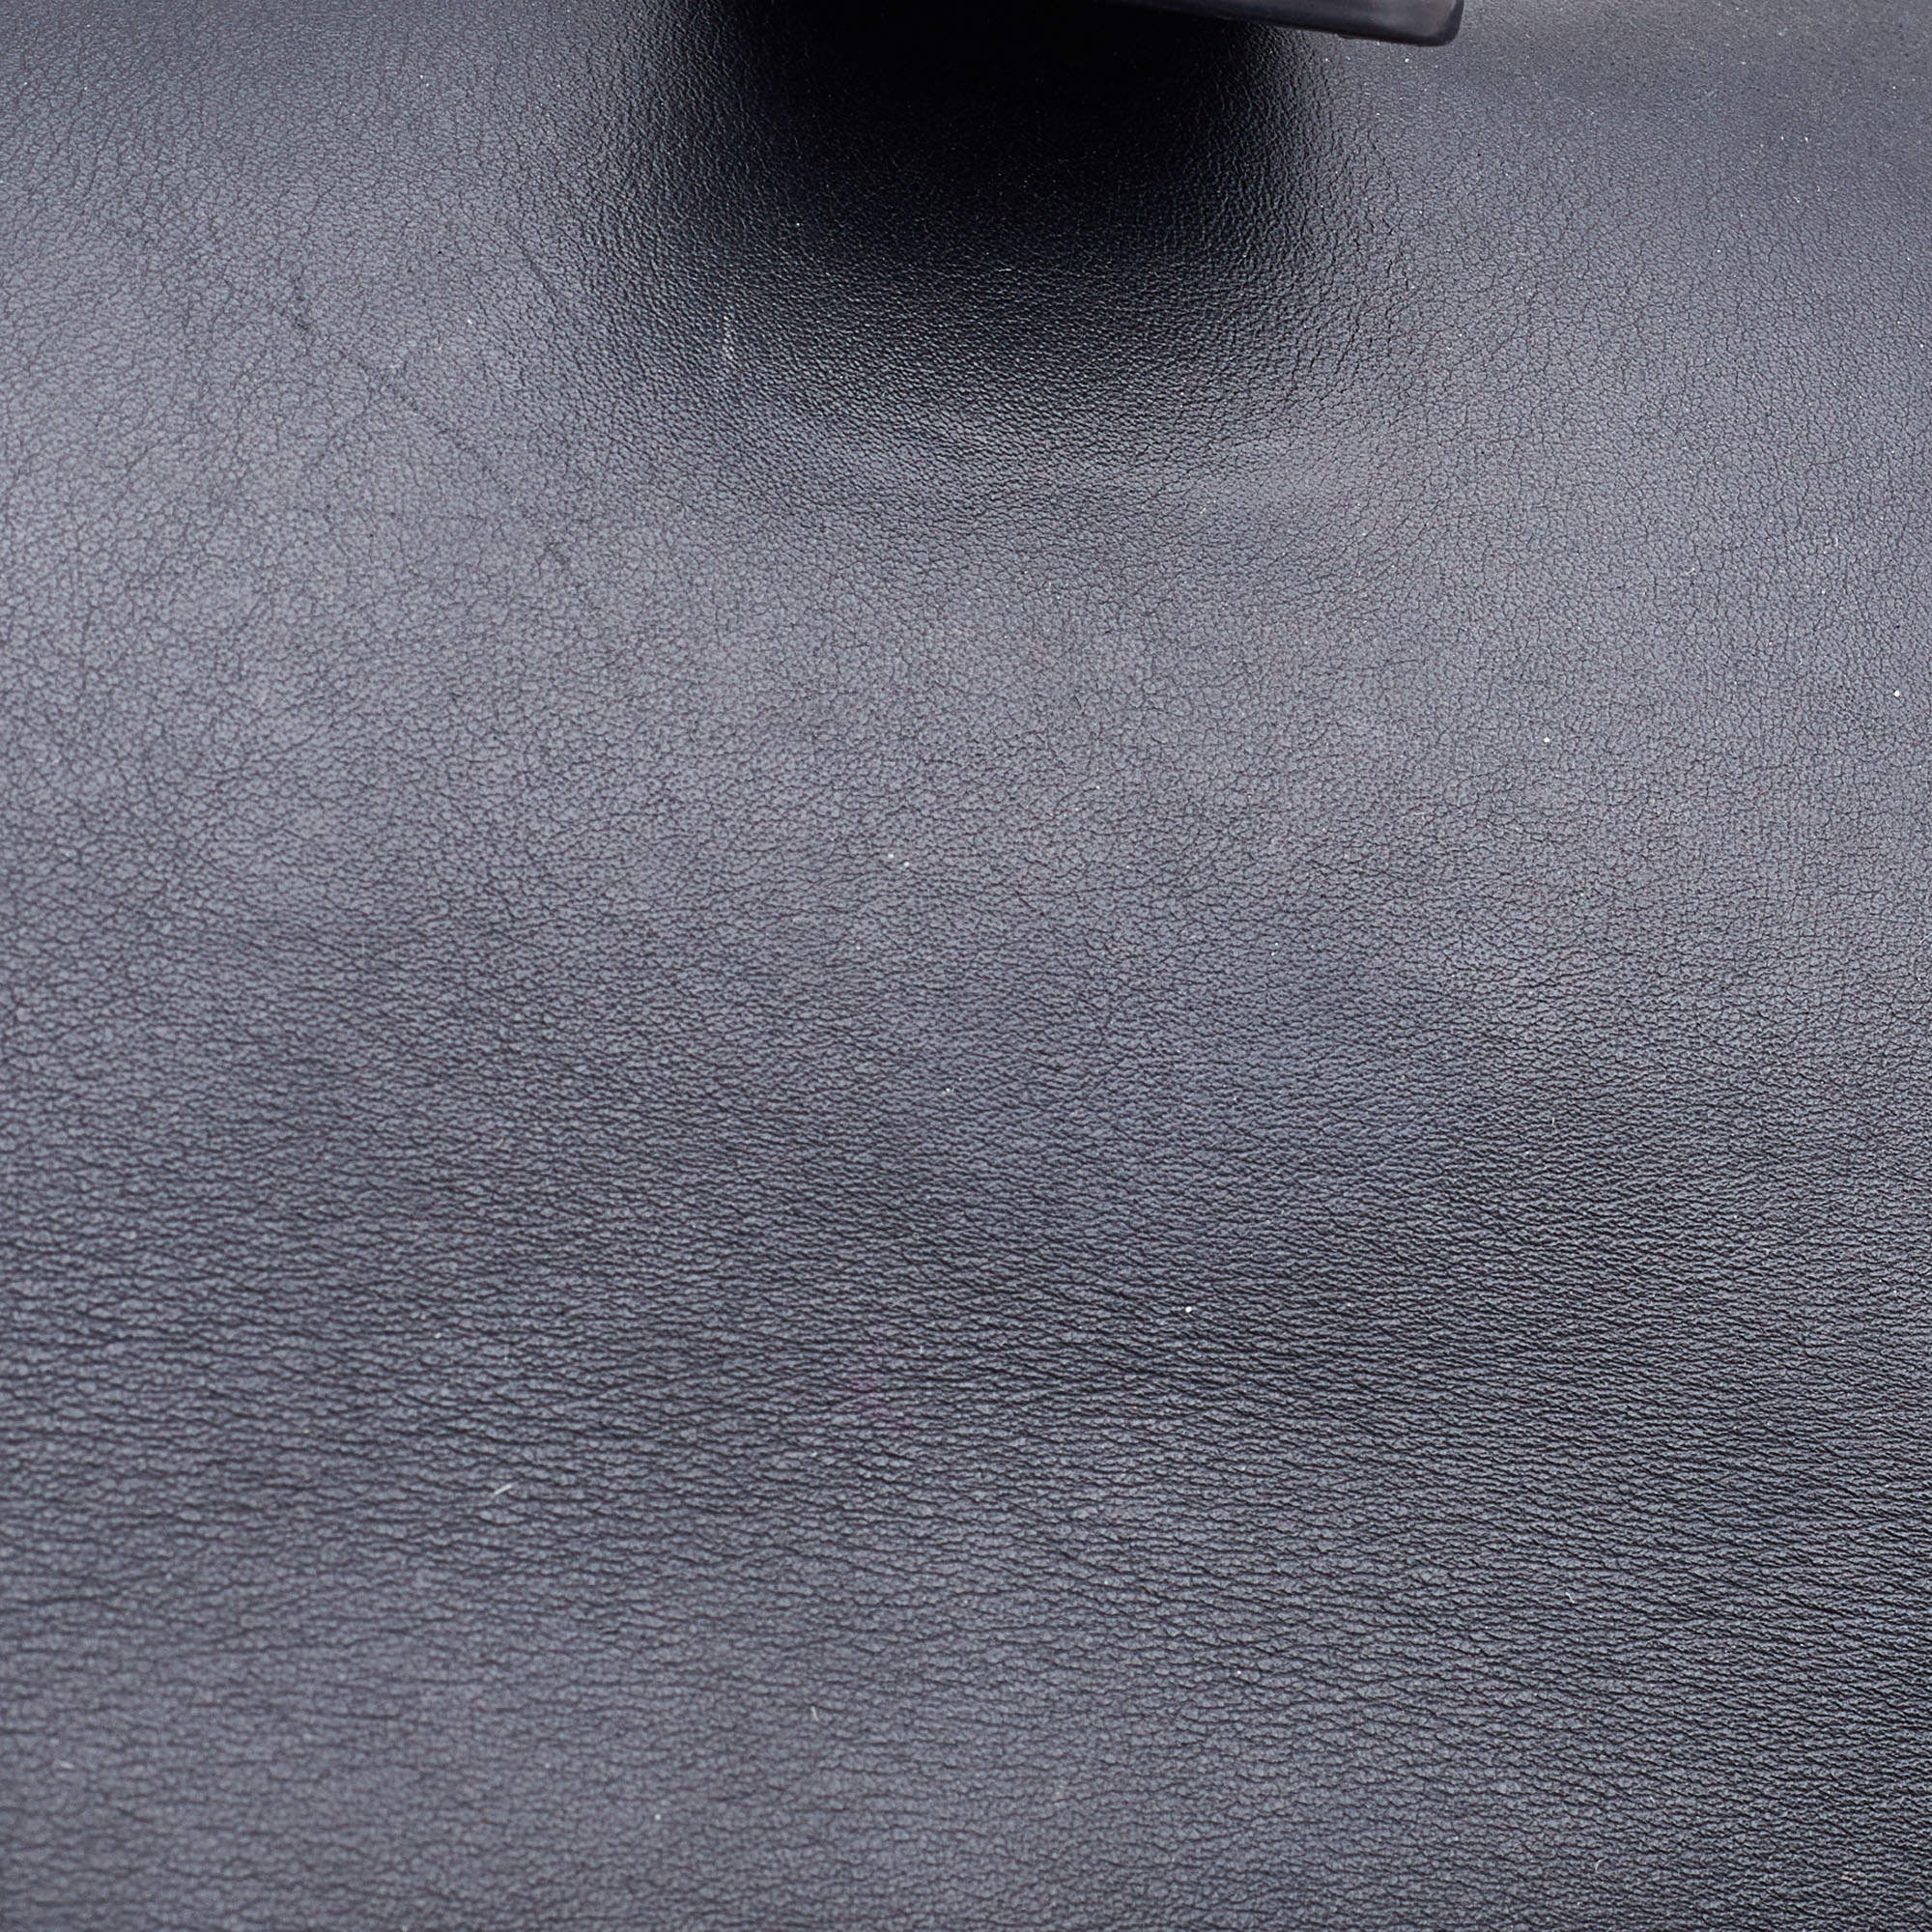 Chloé Faye Wallet on Strap - Black Mini Bags, Handbags - CHL255139